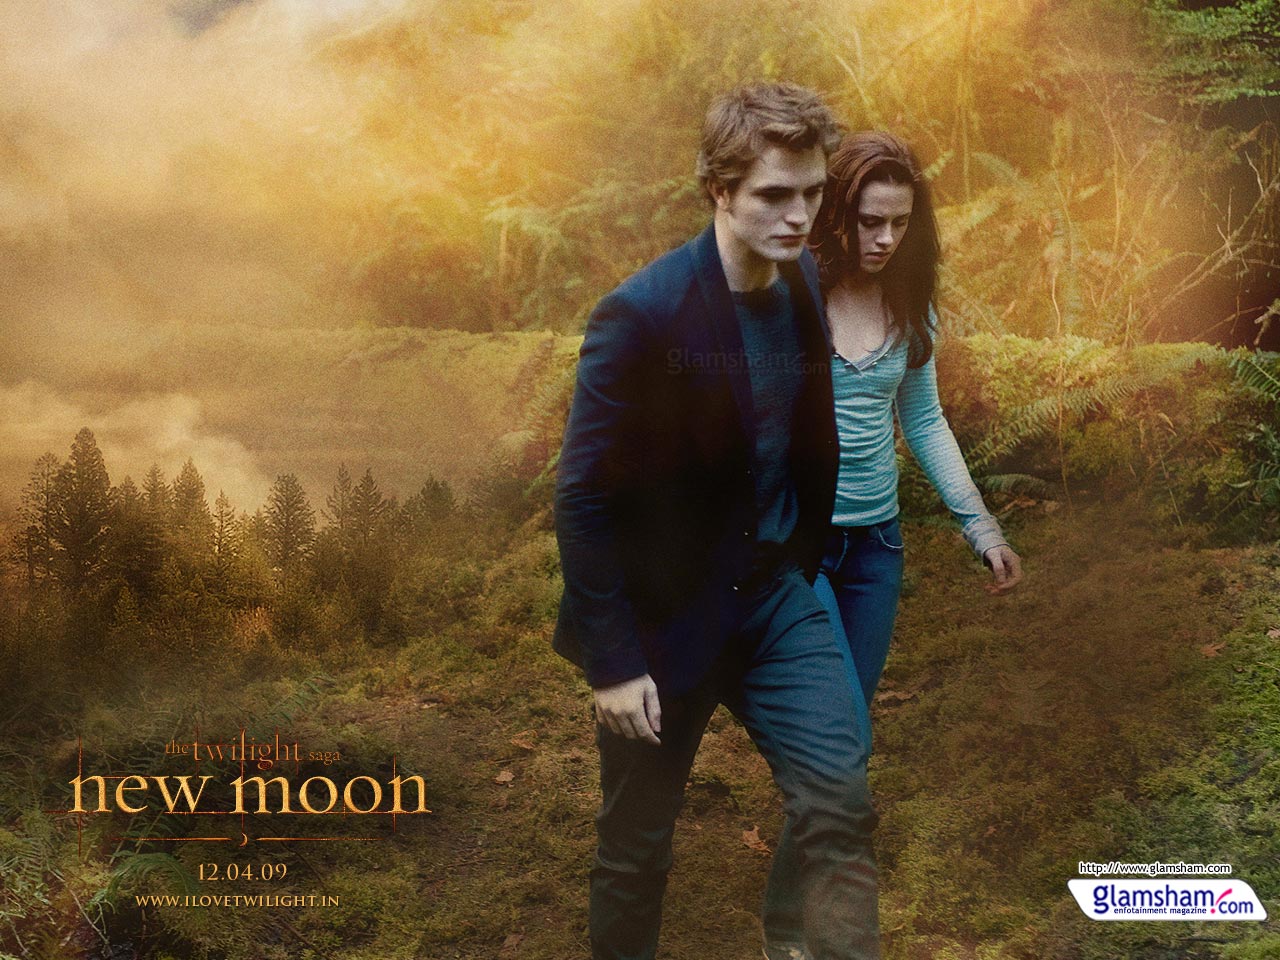 The Twilight Saga New Moon Desktop Wallpaper At